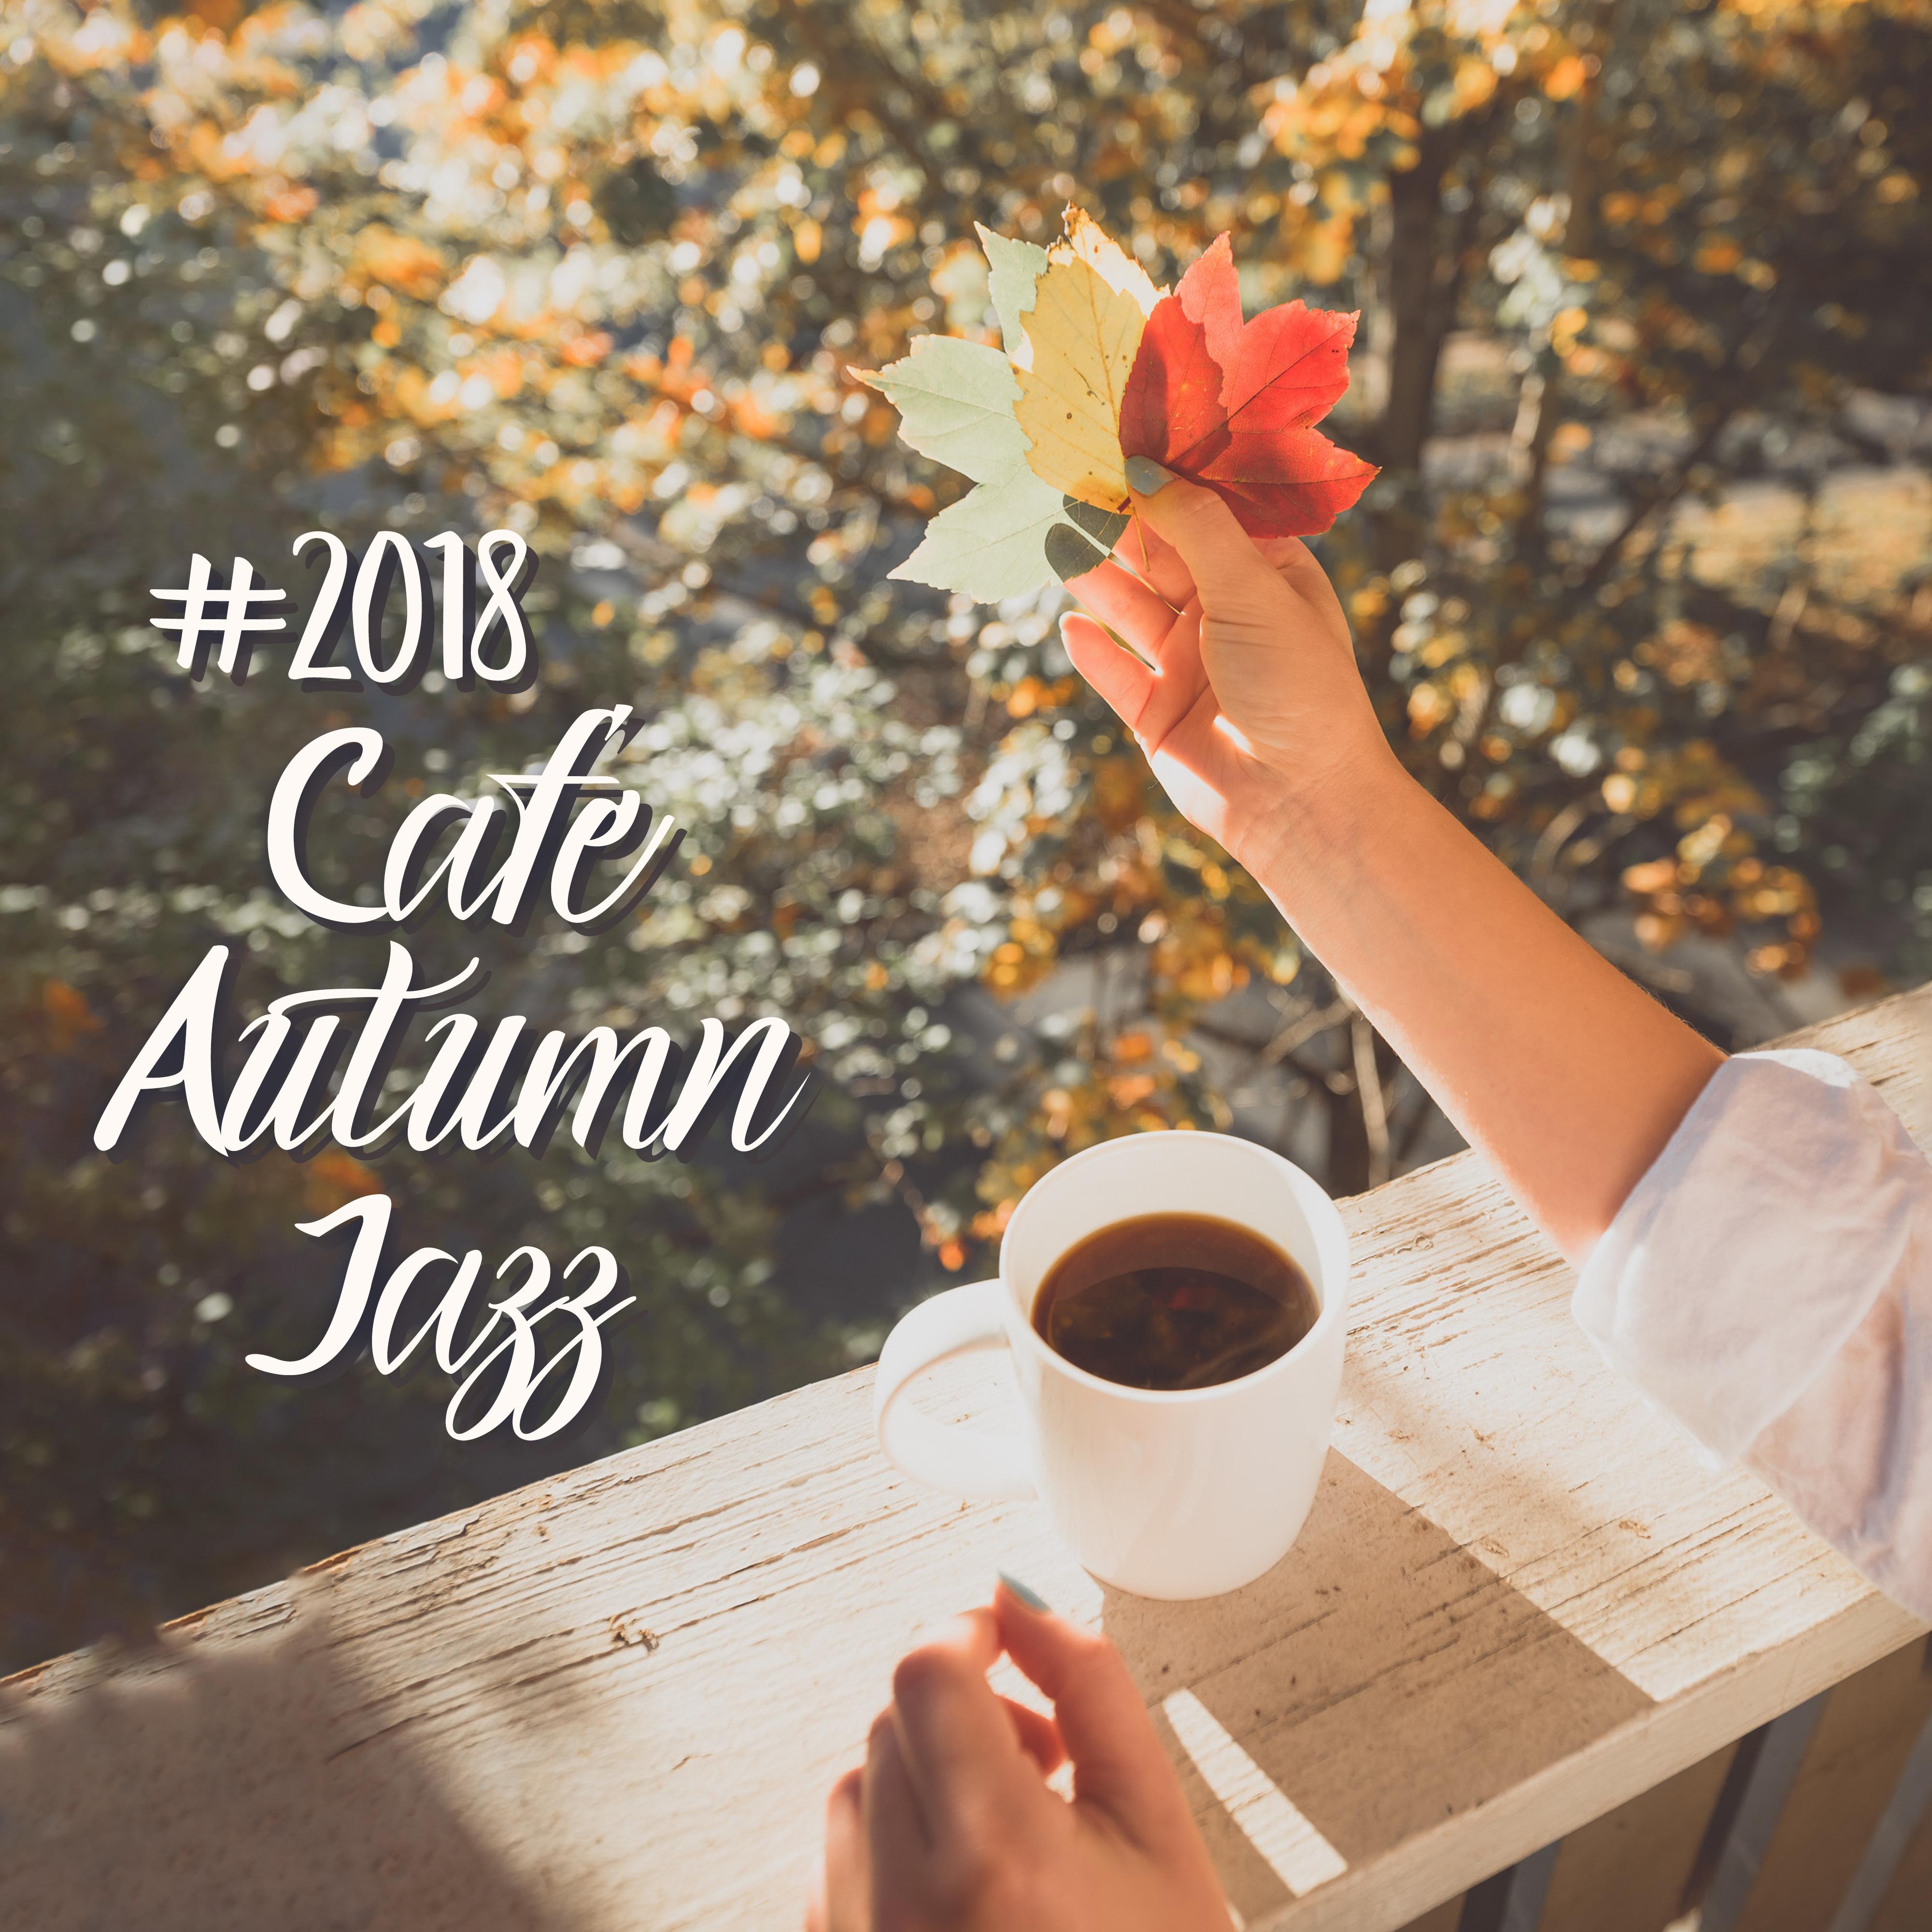 #2018 Cafe Autumn Jazz